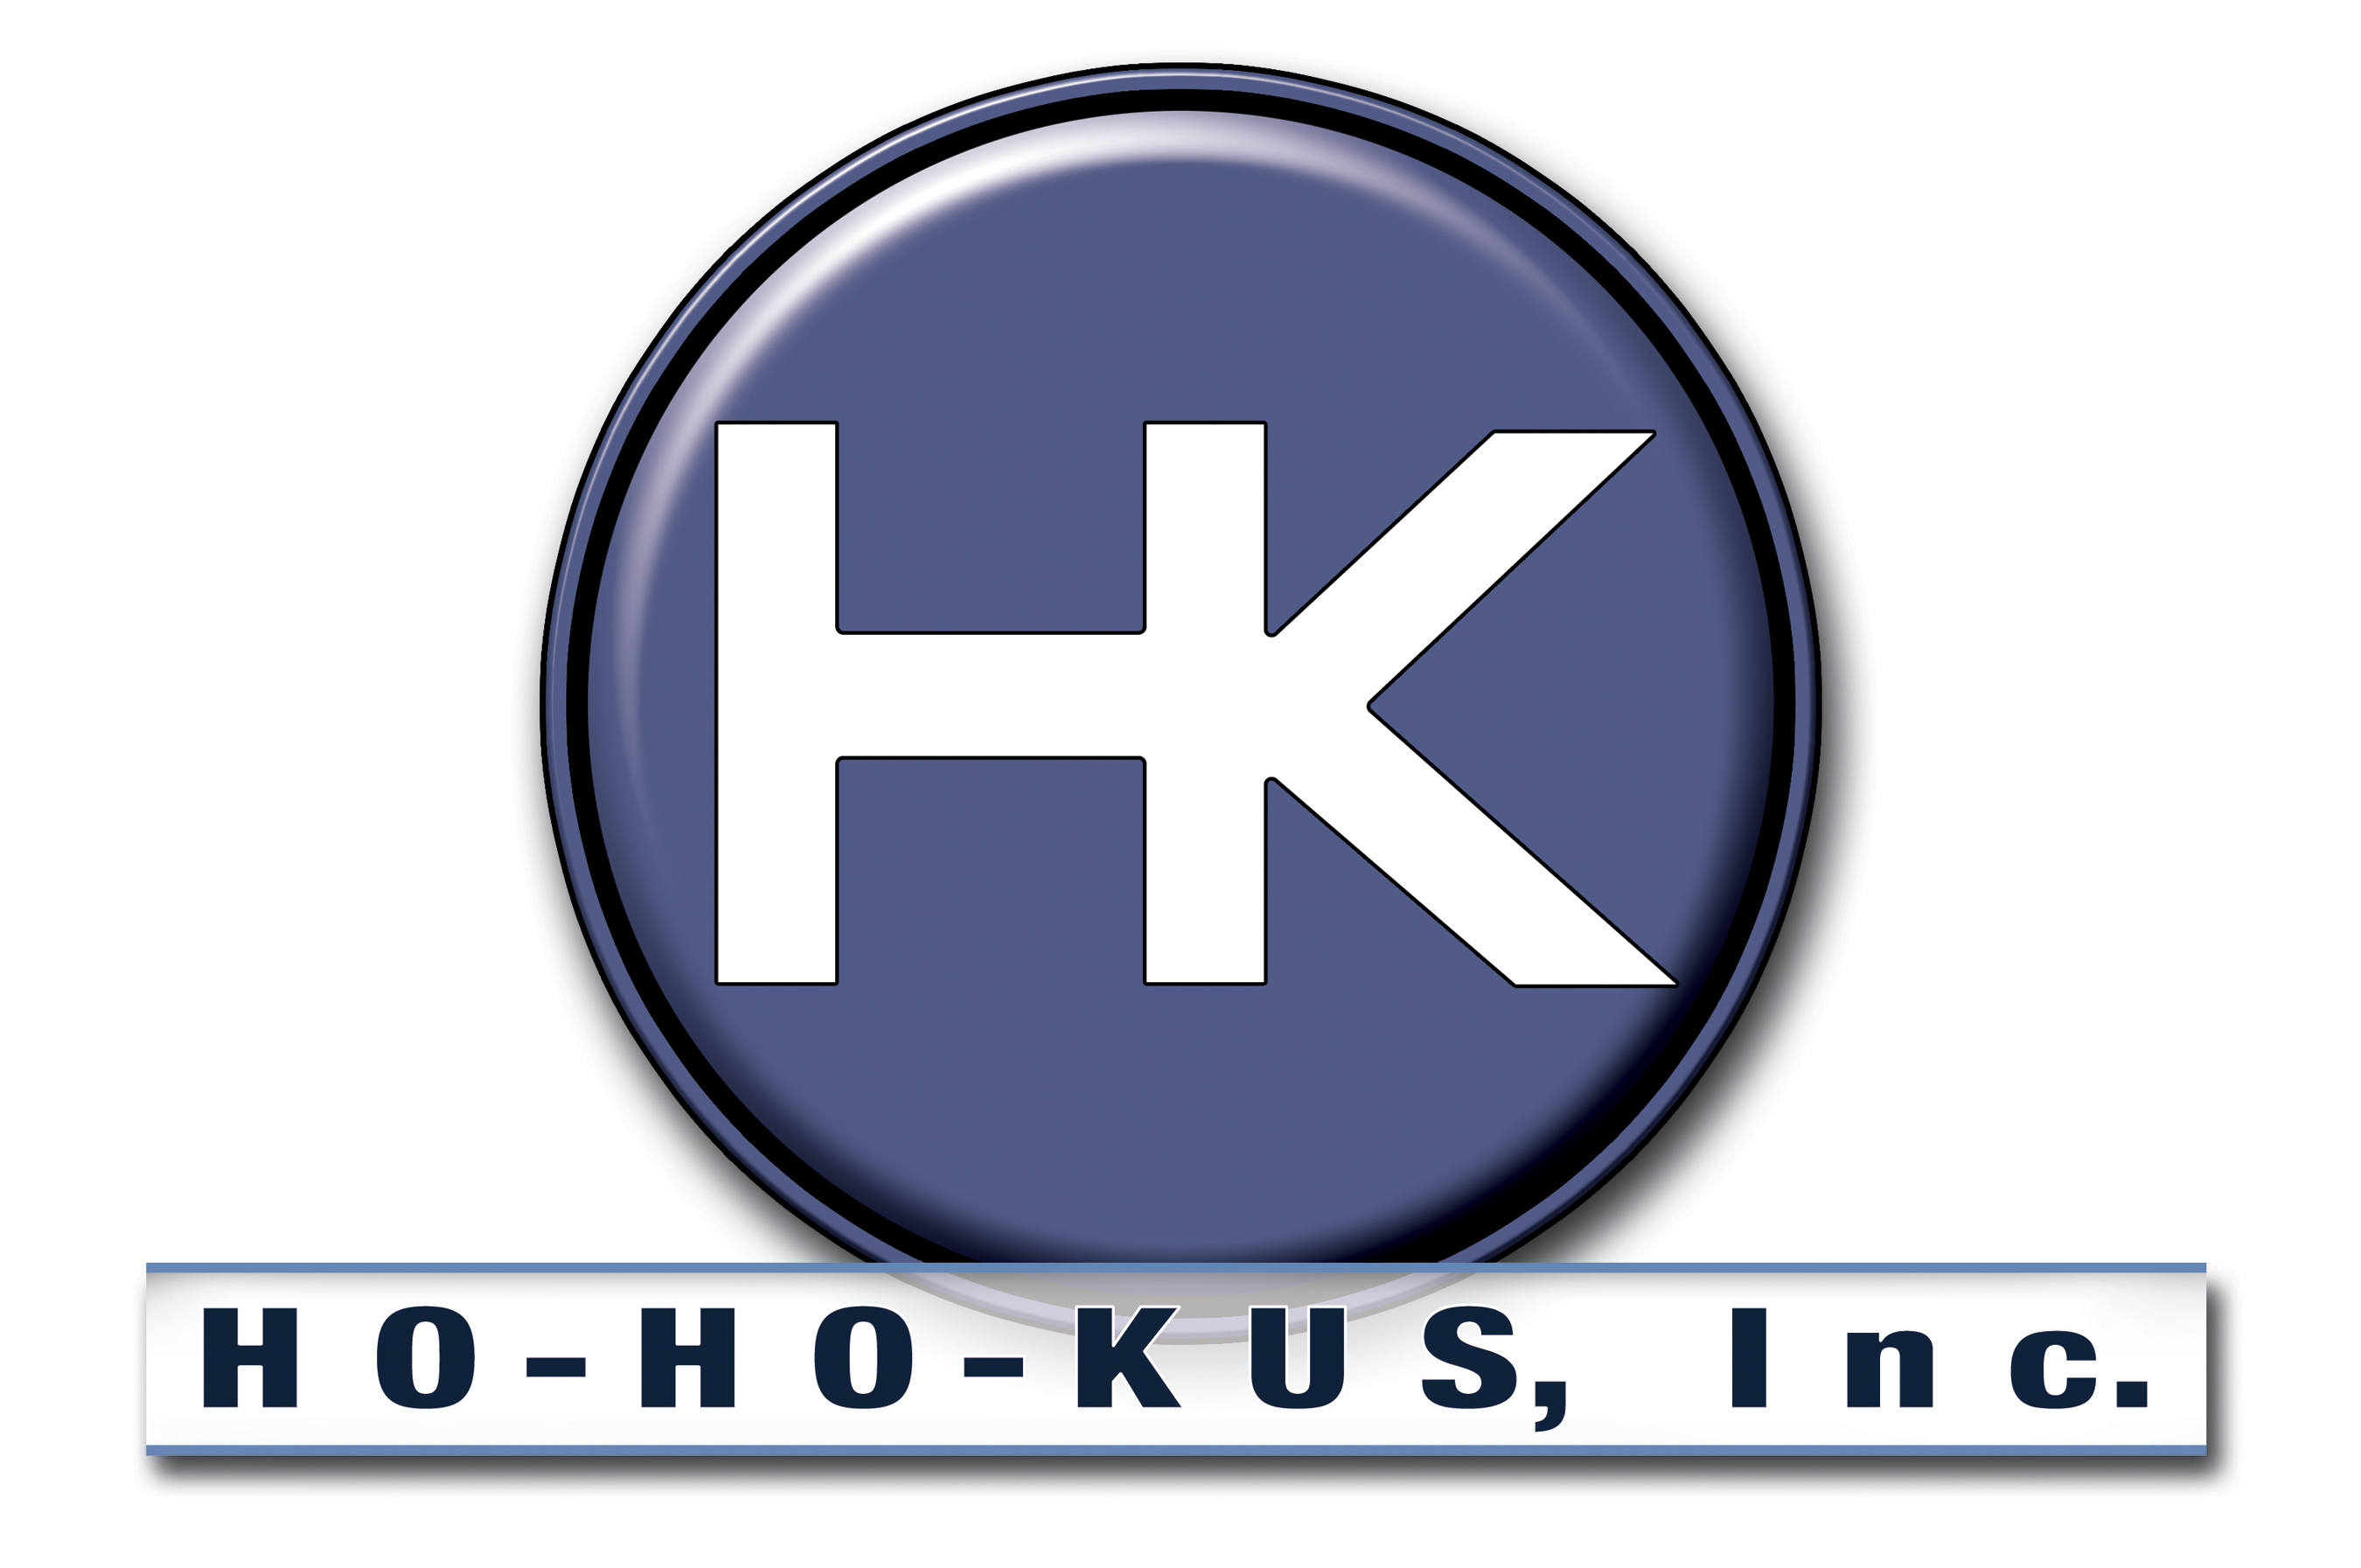 Hohokus Inc.